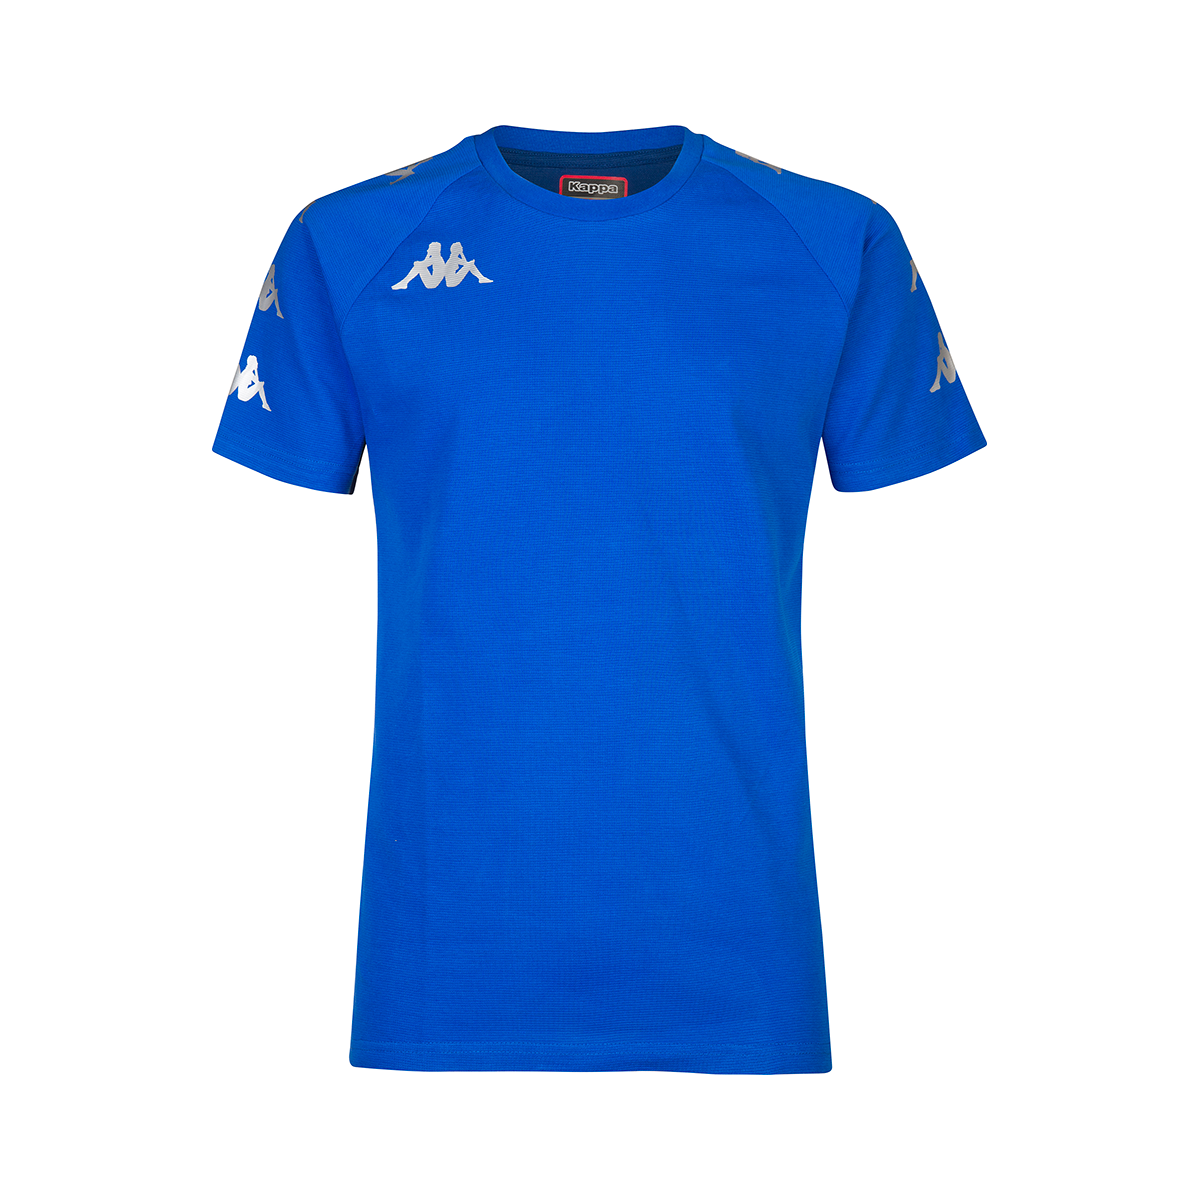 Camiseta Ancone niño Azul - Imagen 1